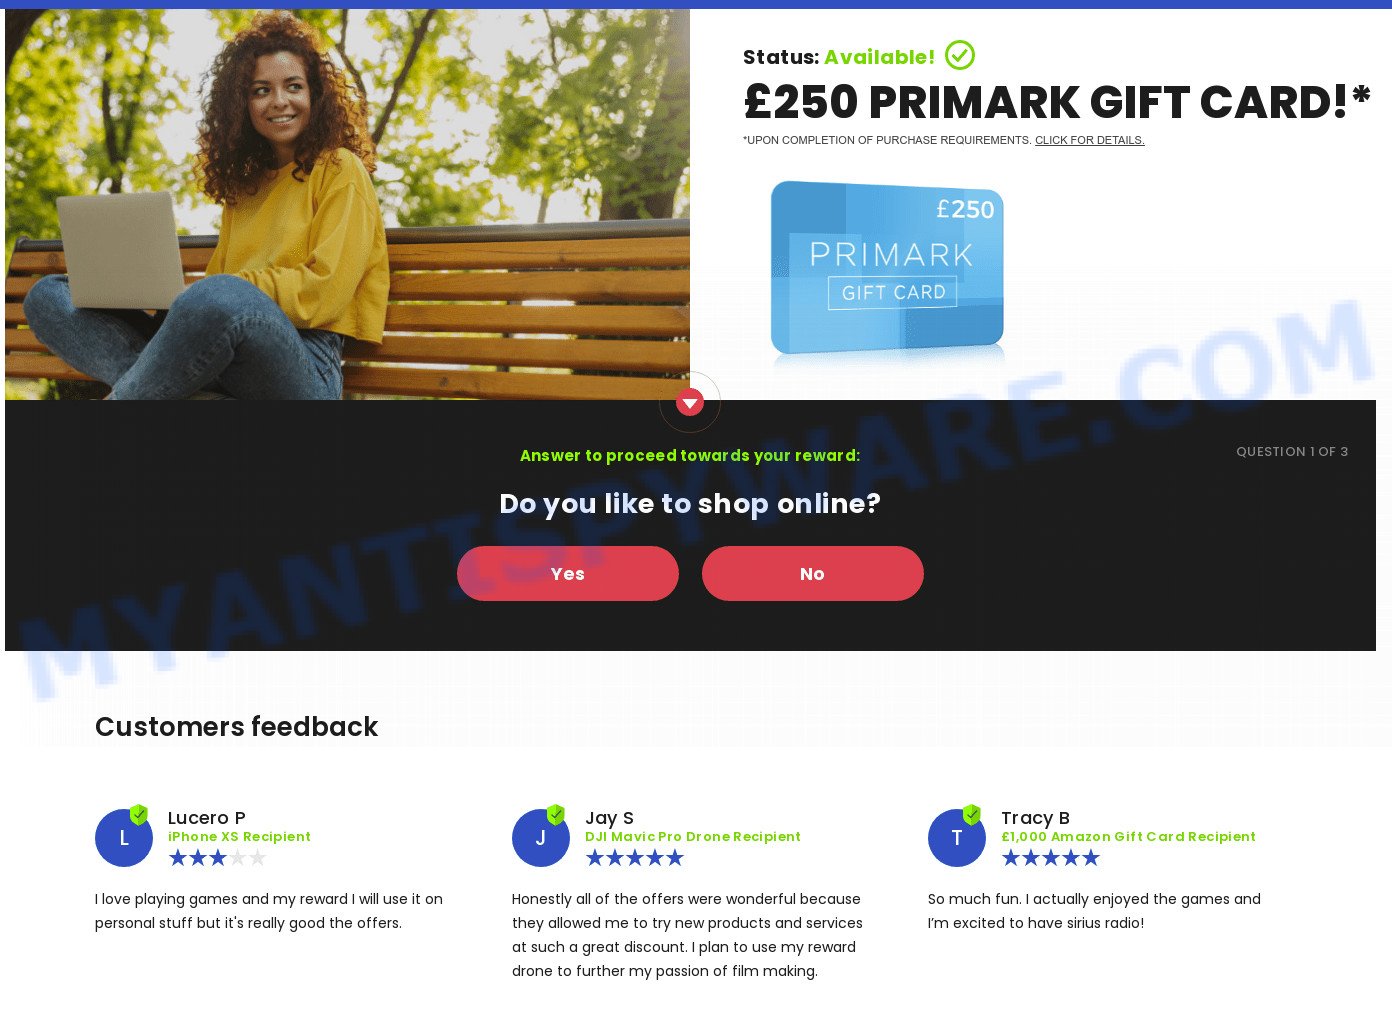 Smrturl.co redirects Primark Gift Card Scam